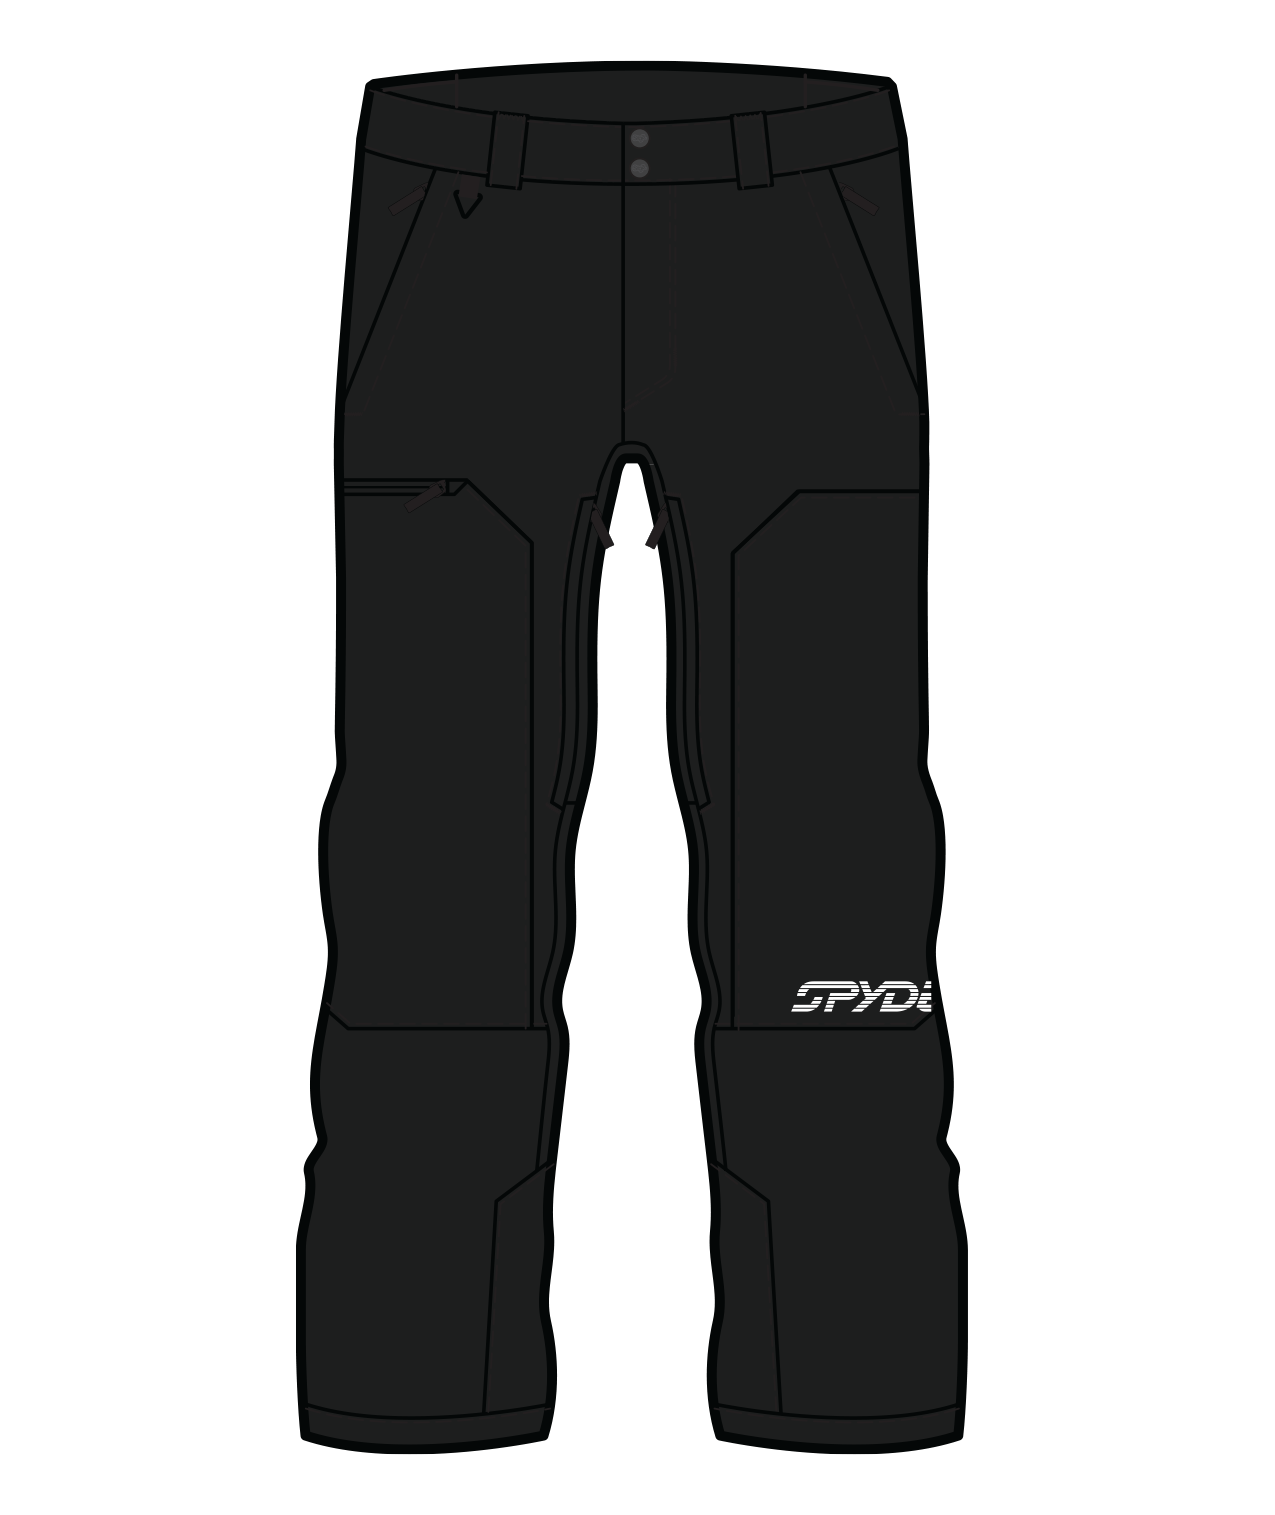 Spyder Black Active Pants Size L - 70% off